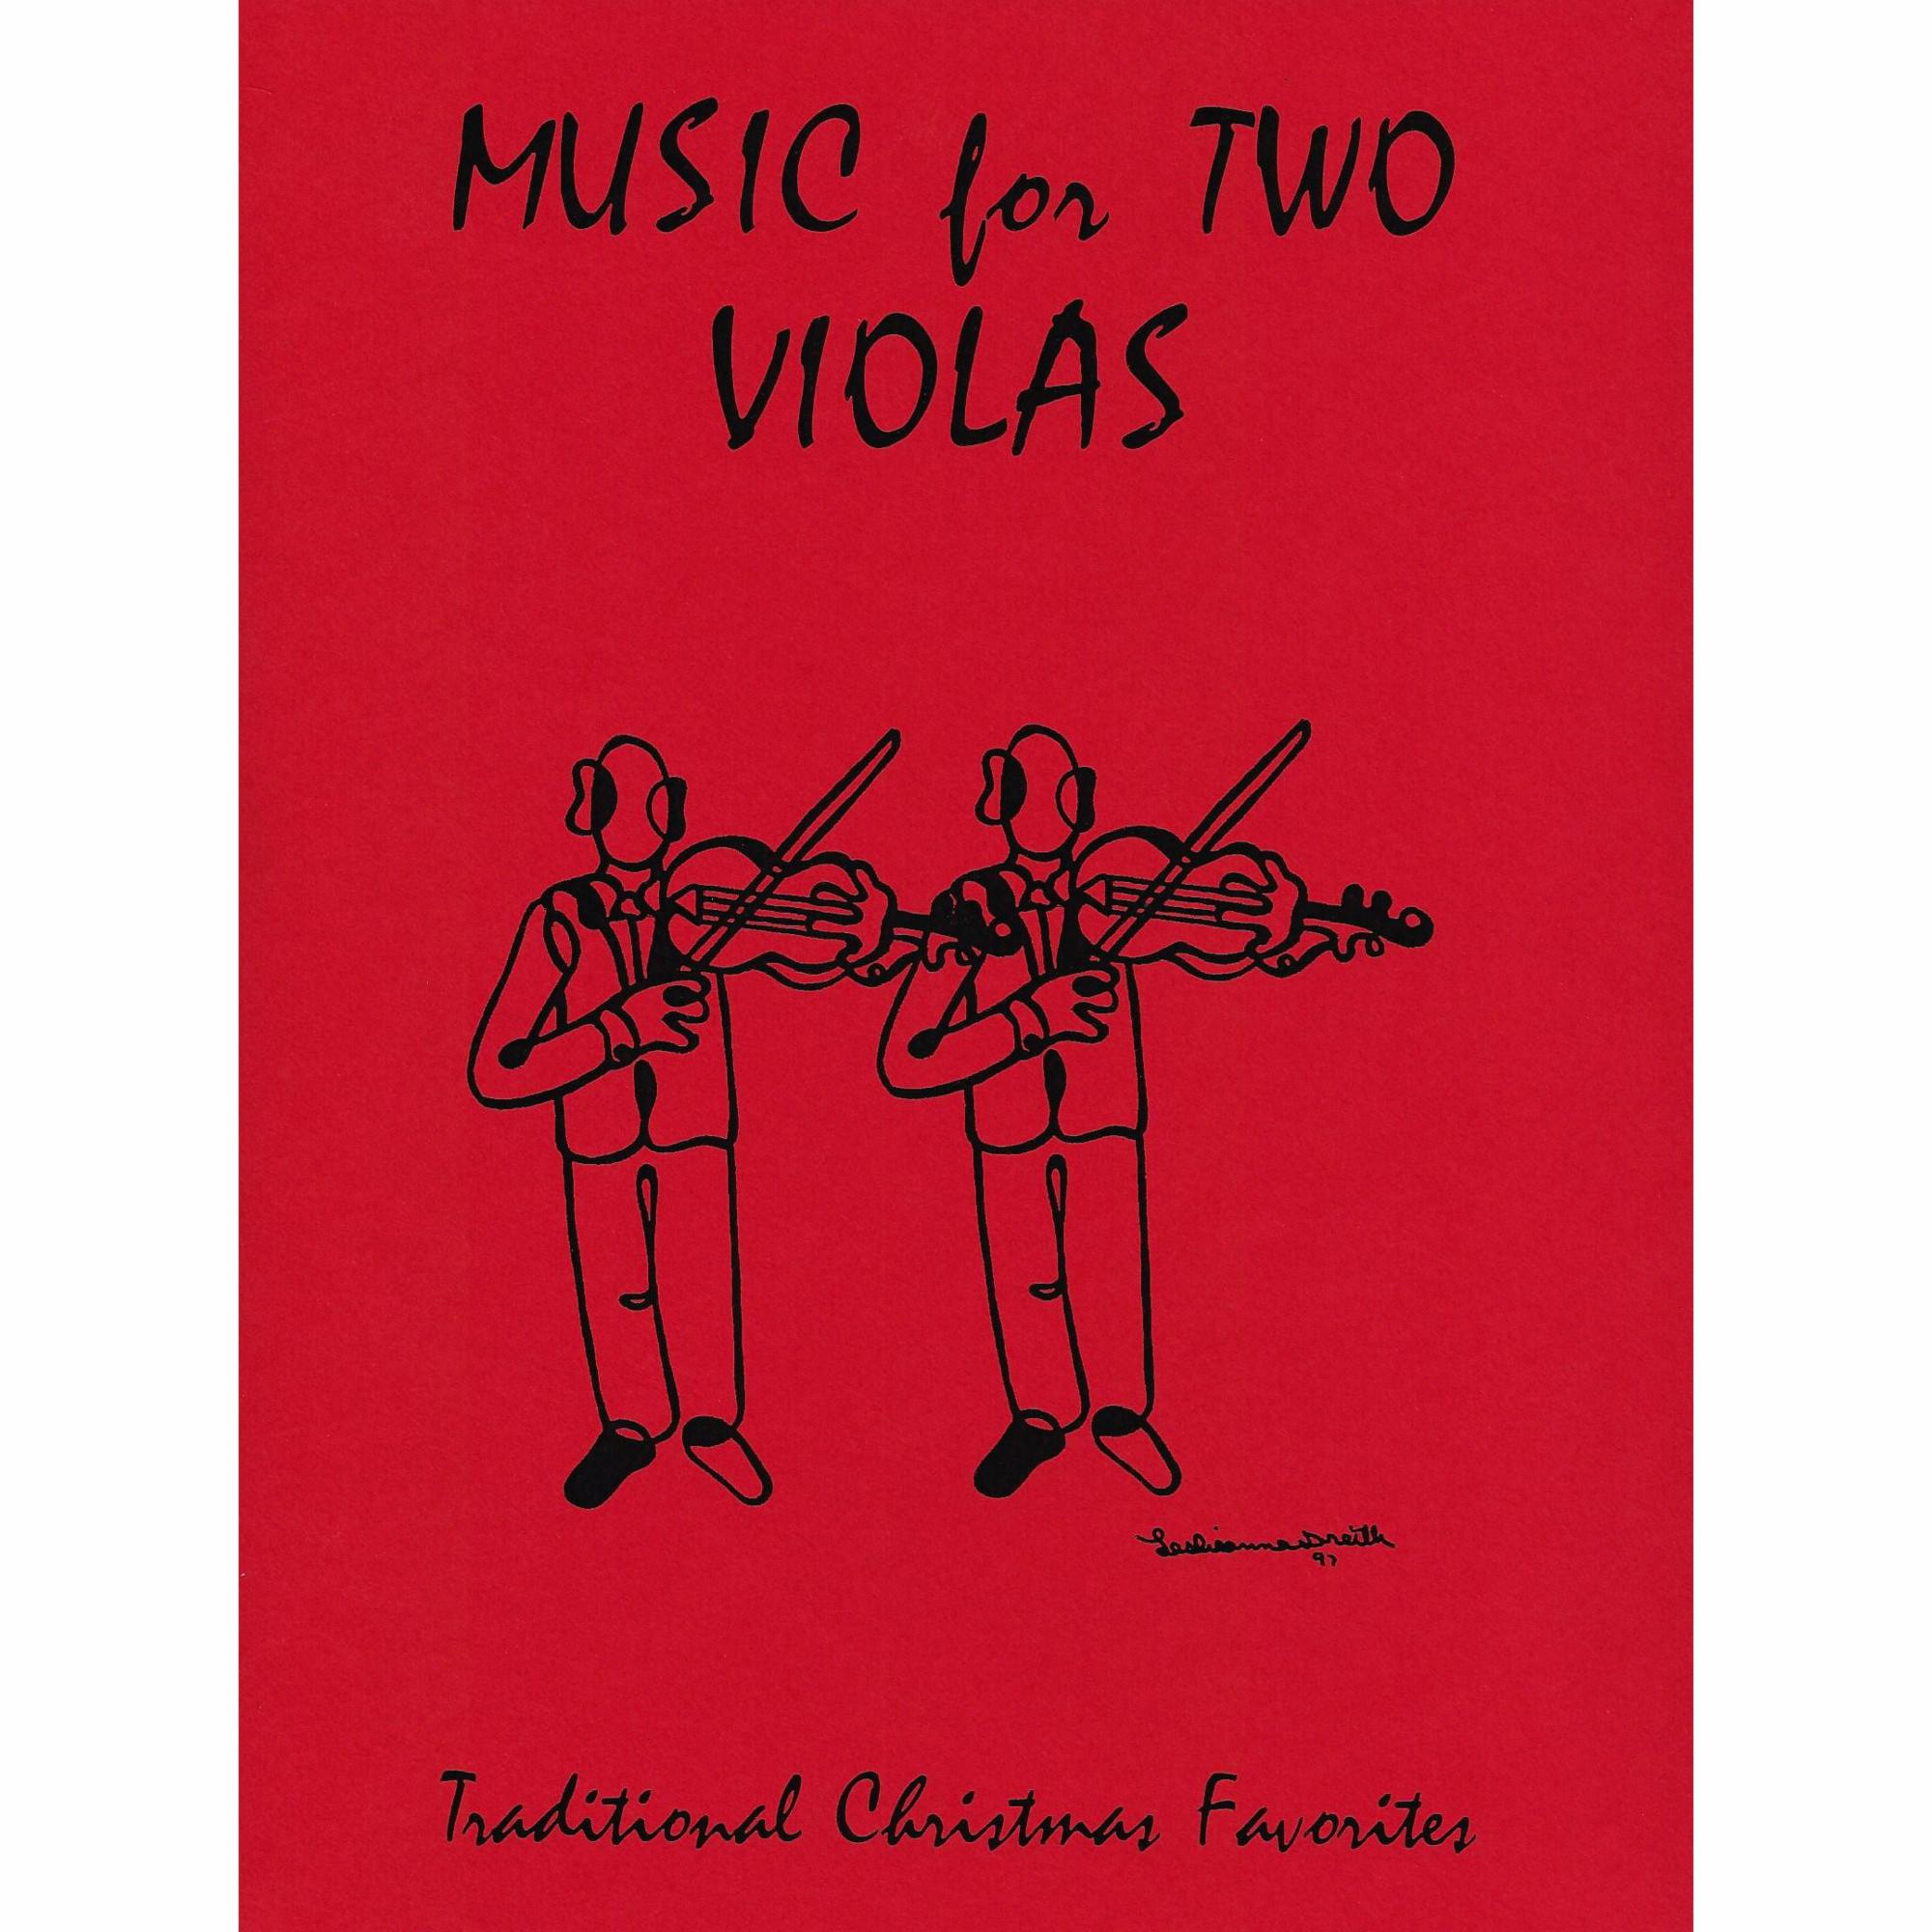 Music for Two Violas: Traditional Christmas Favorites